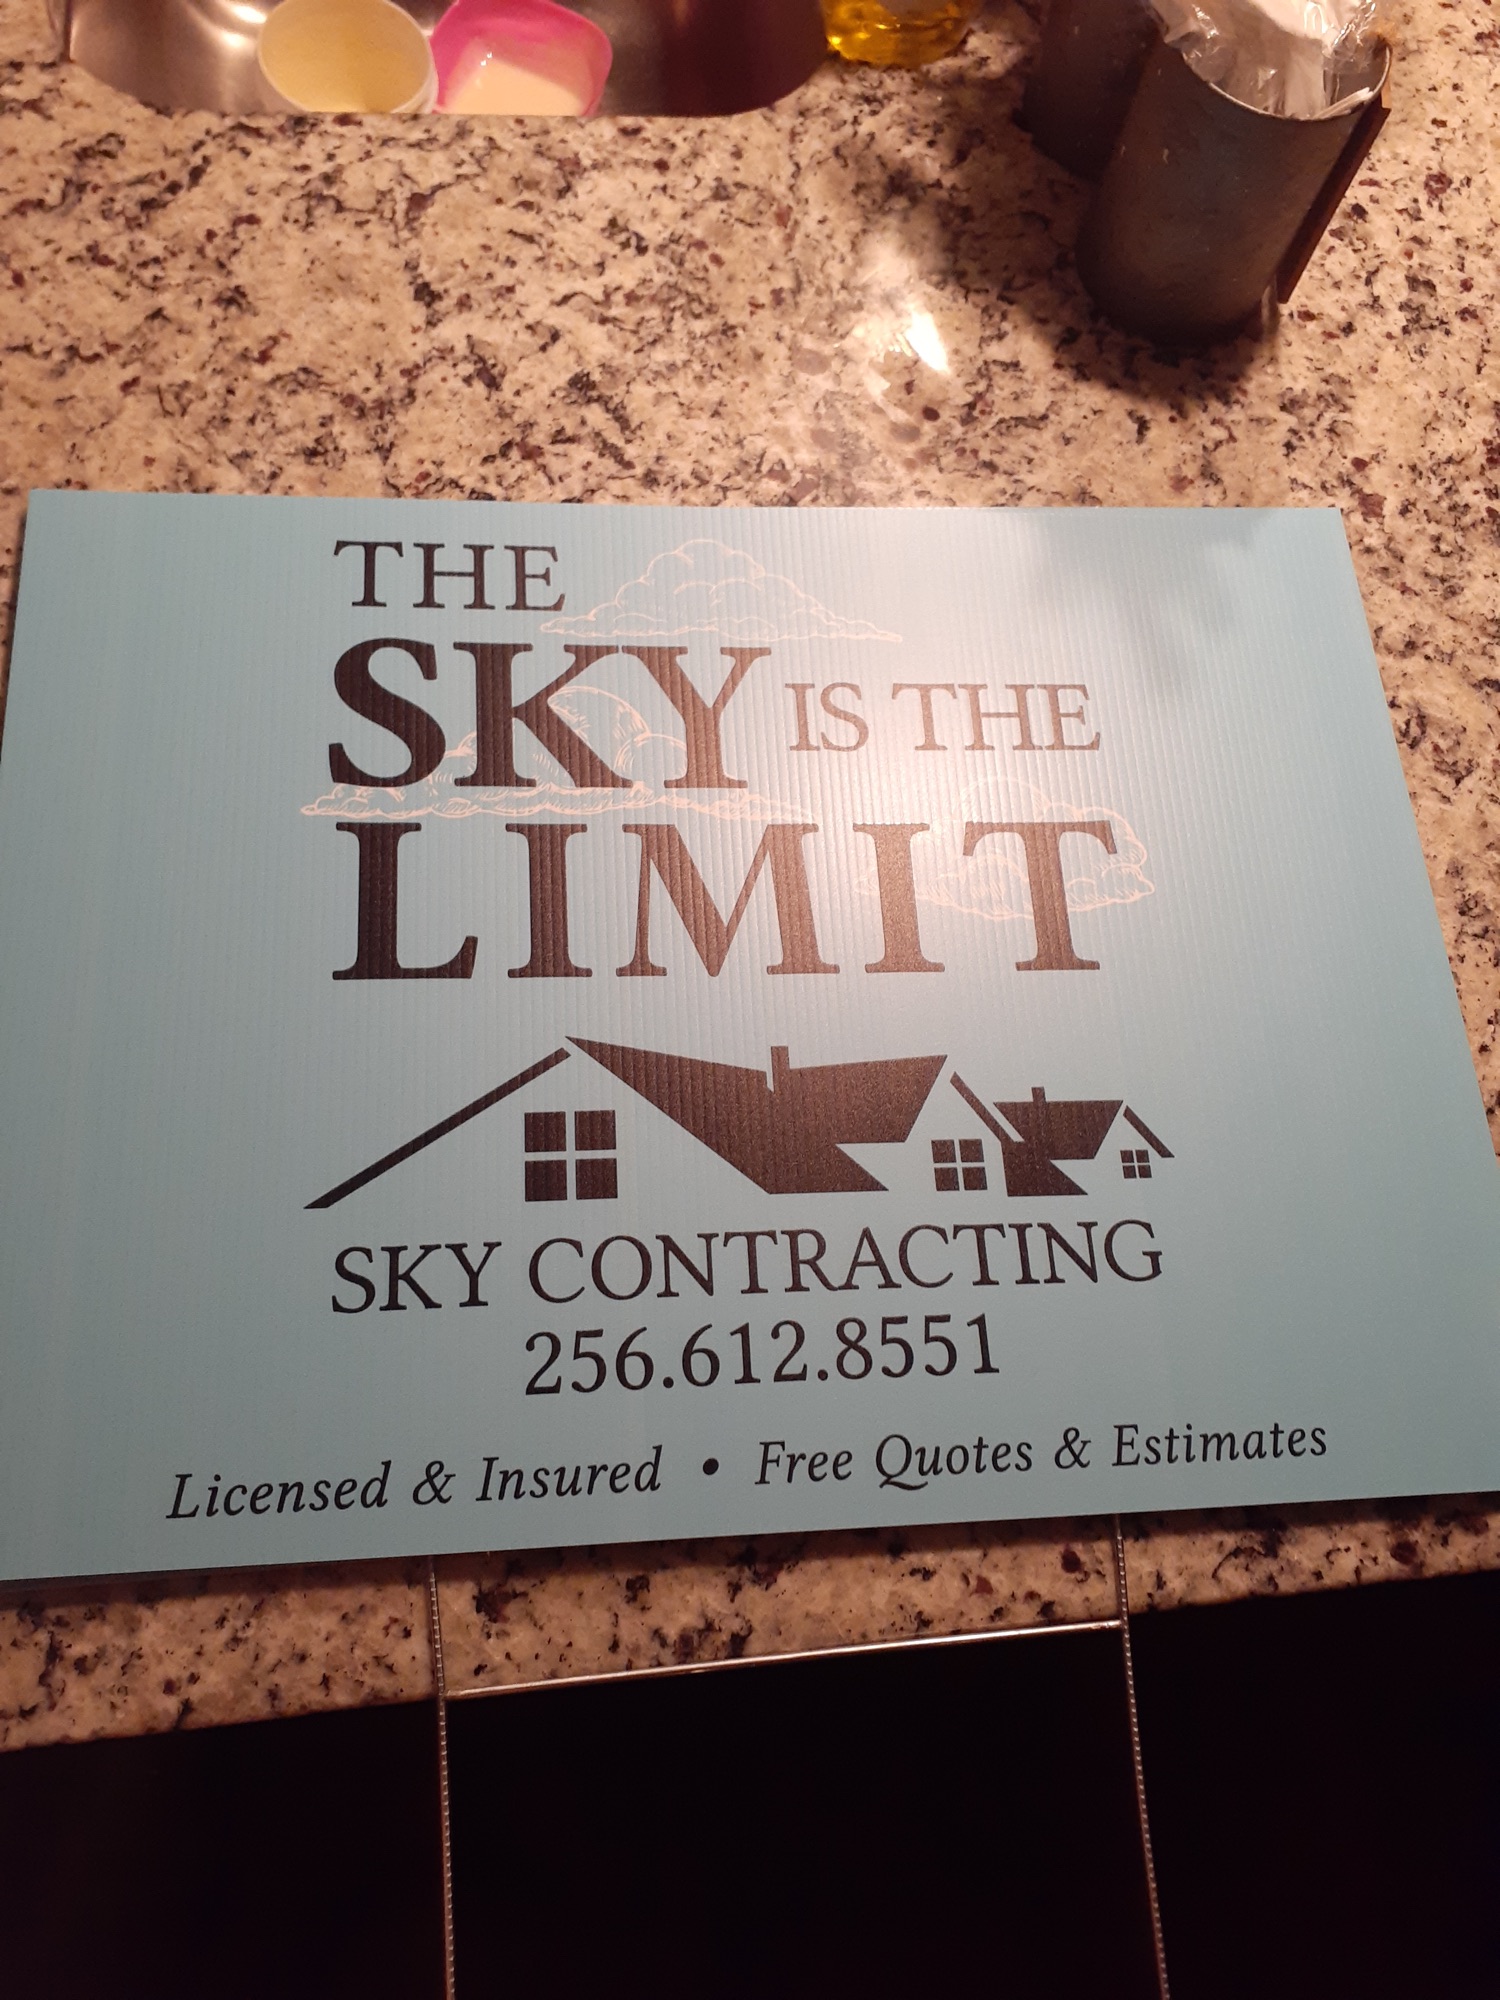 Sky Contracting Logo